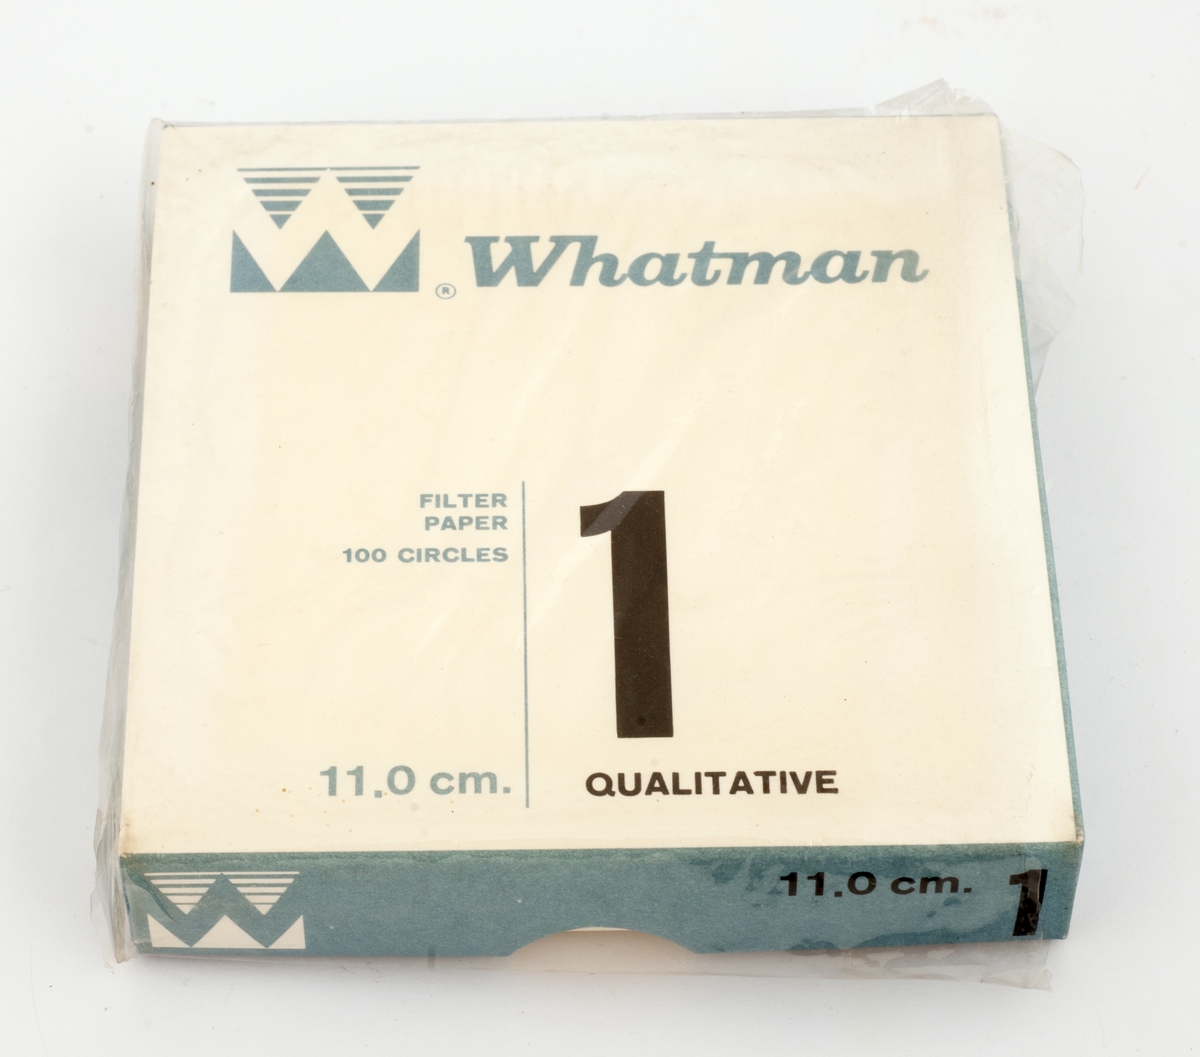 En pakke Whatman filtrerpapir